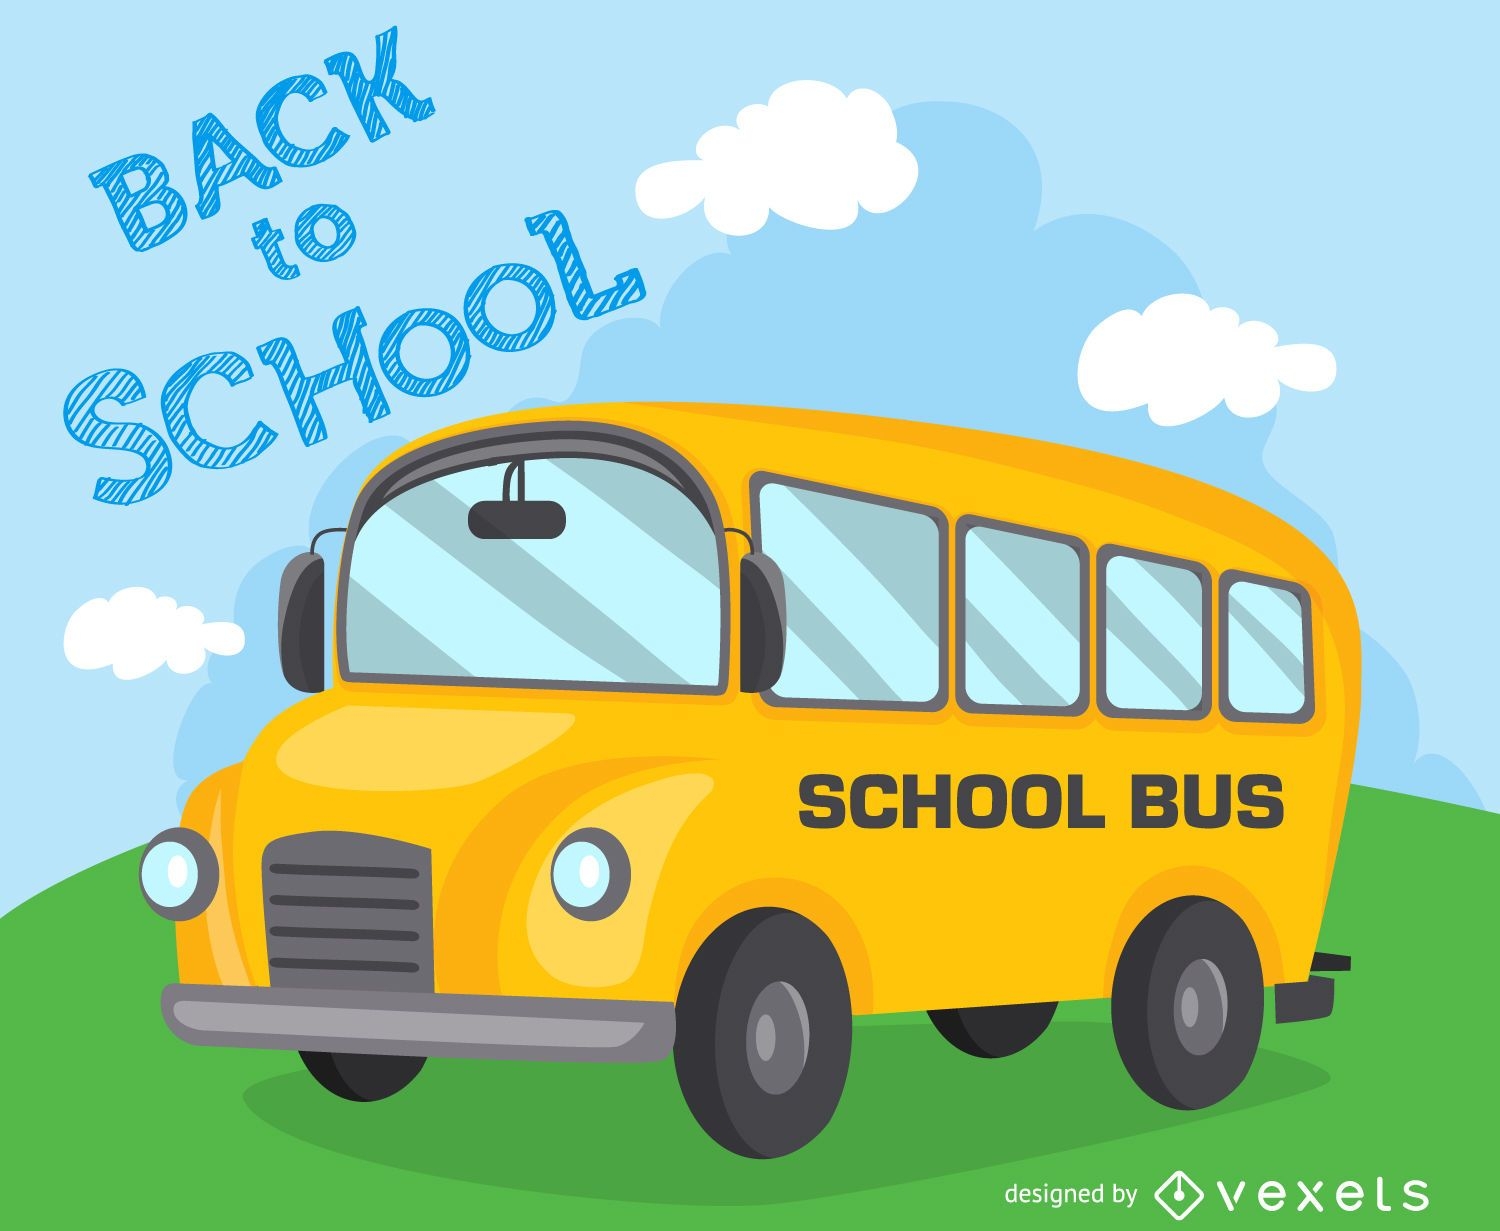 Back to school illustration bus